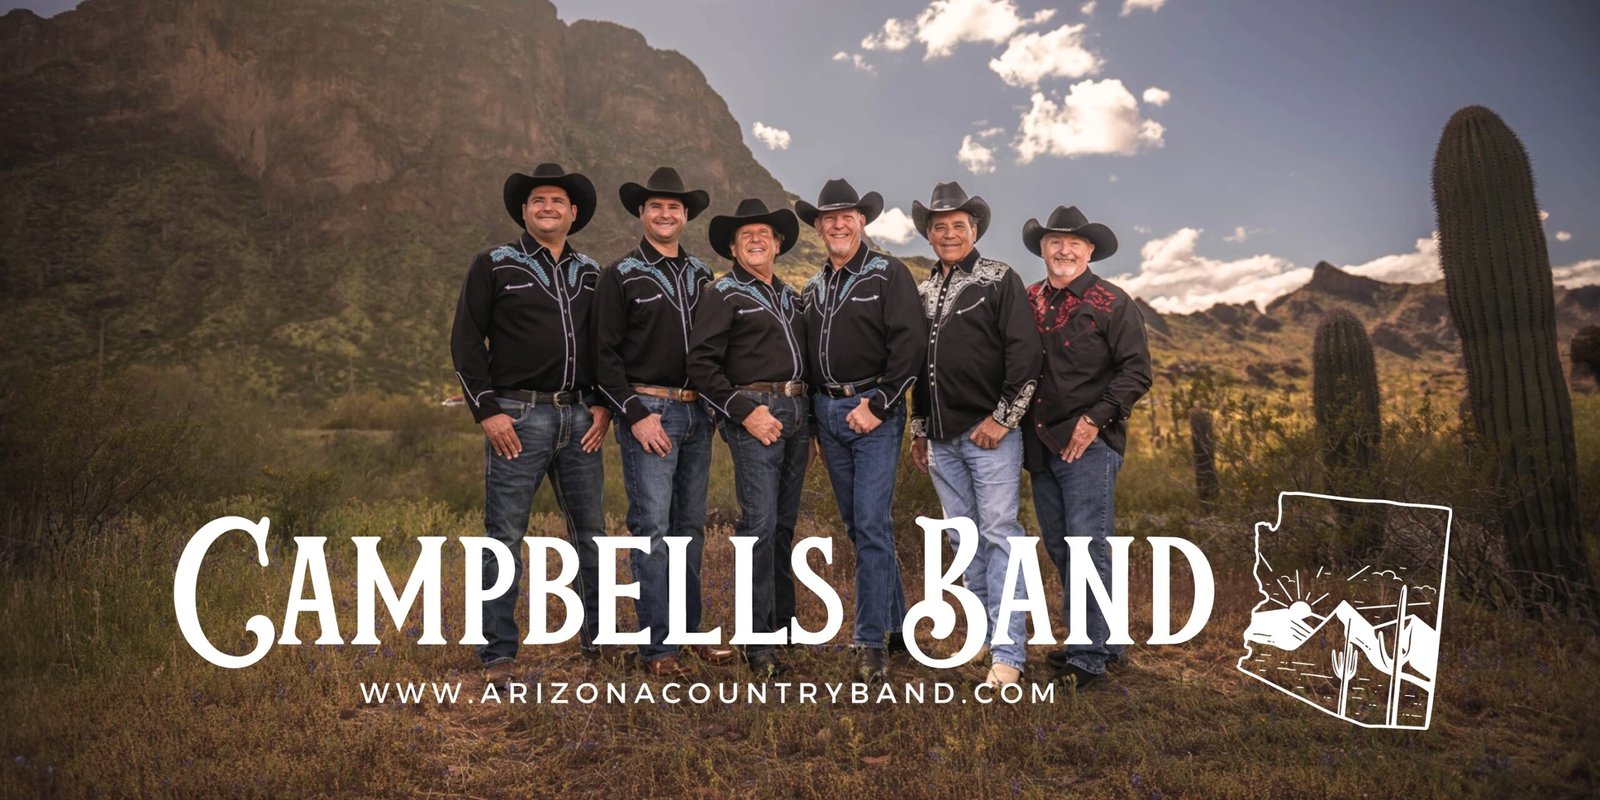 Arizona Country Band - The Campbells Band